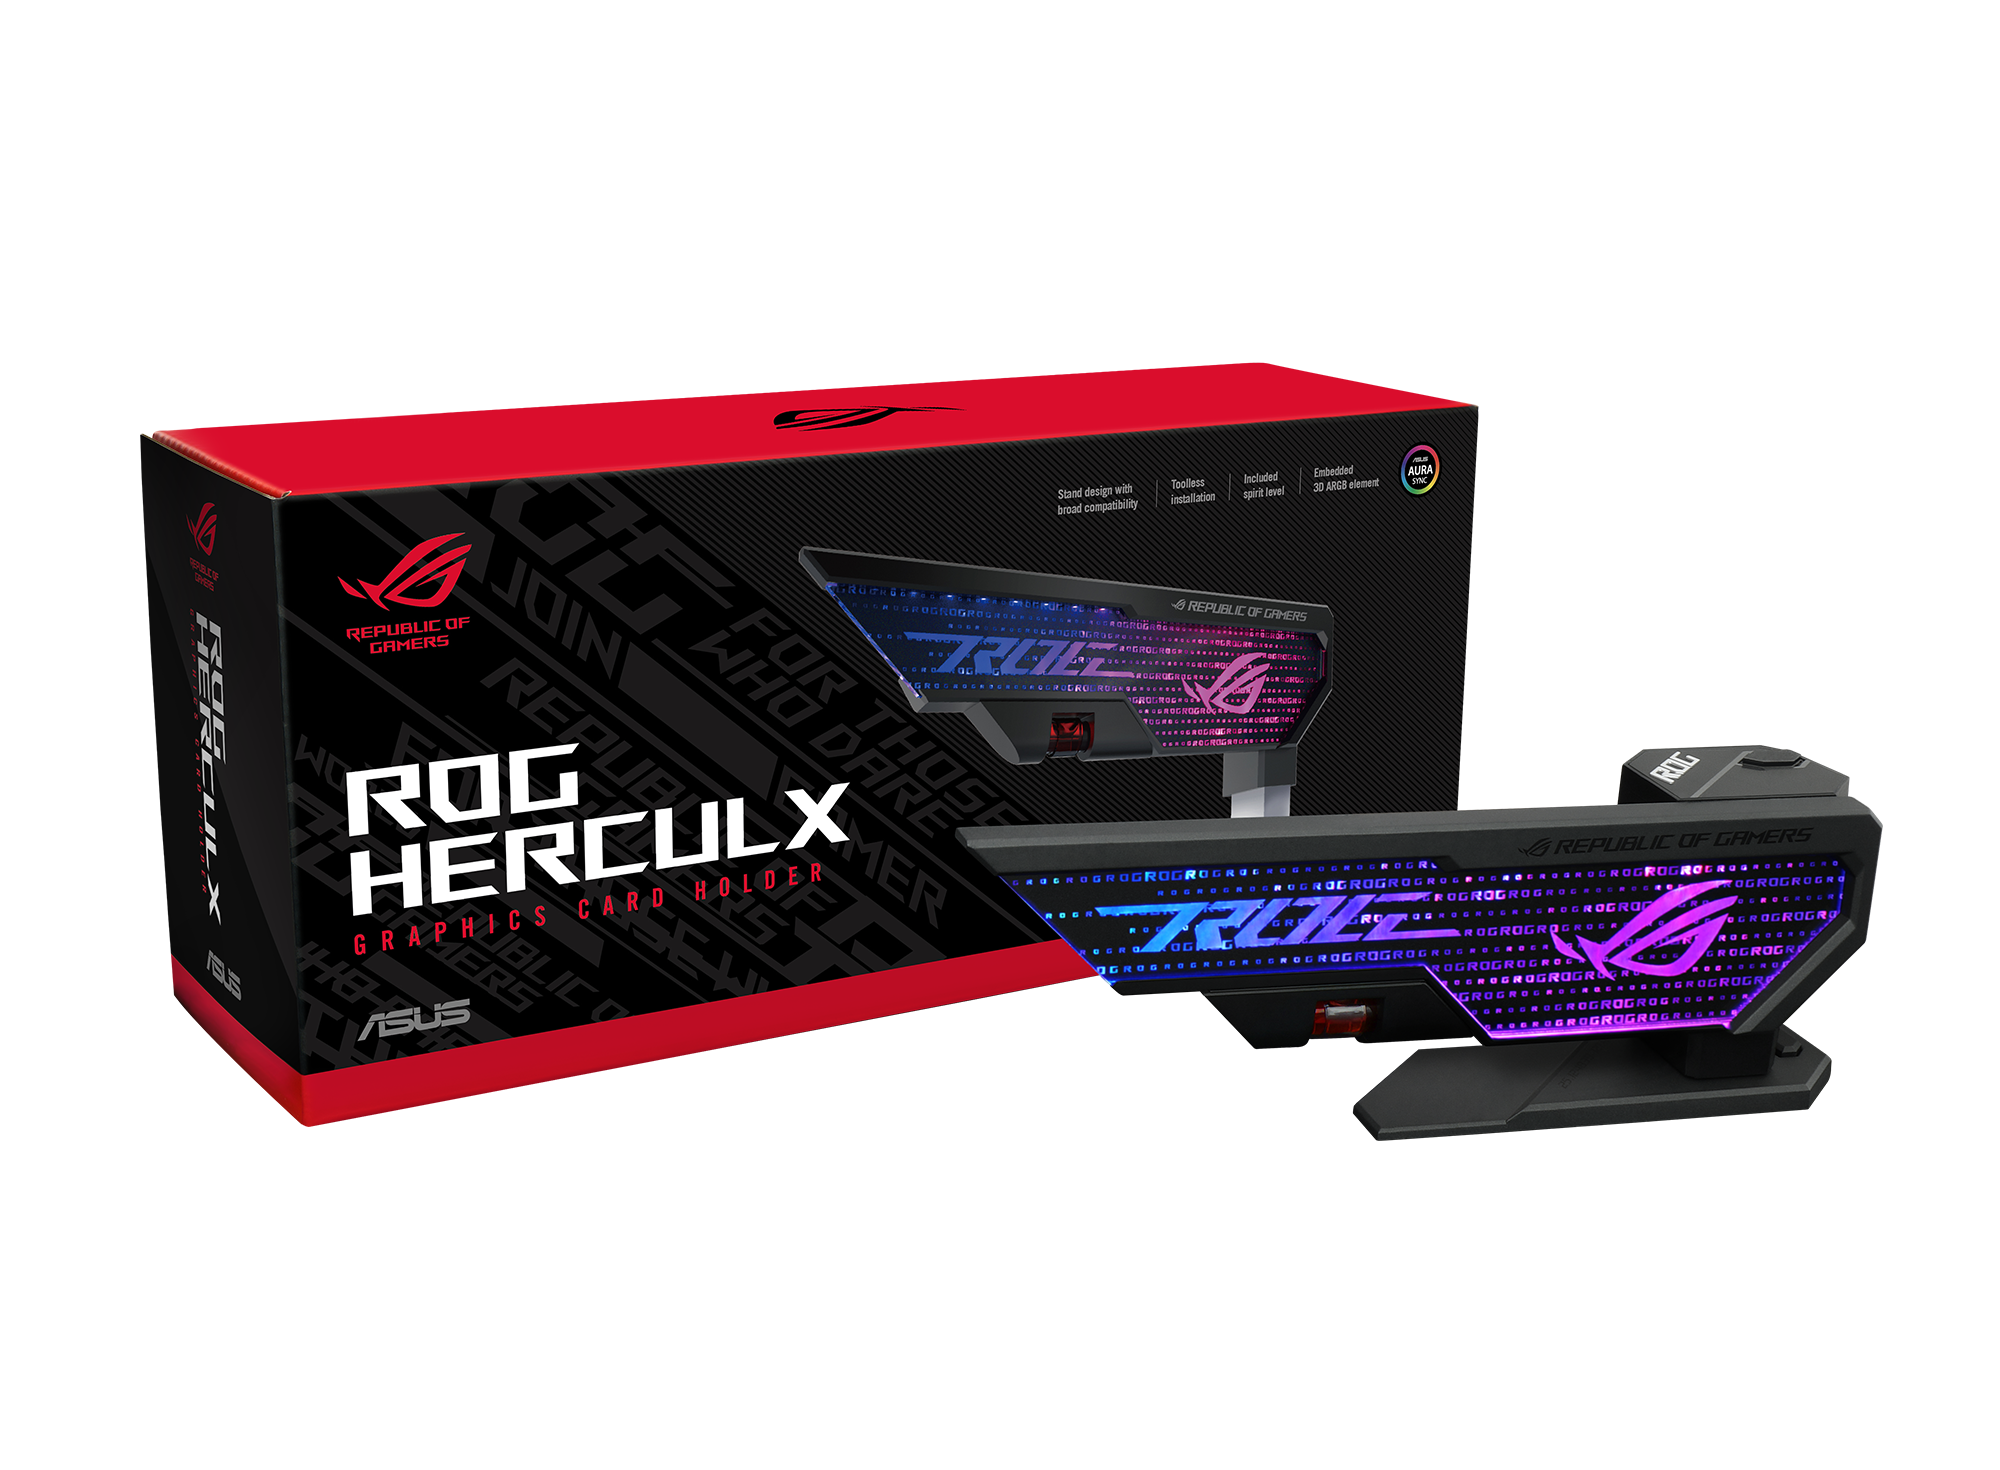 ROG Herculx Graphics Card Holder